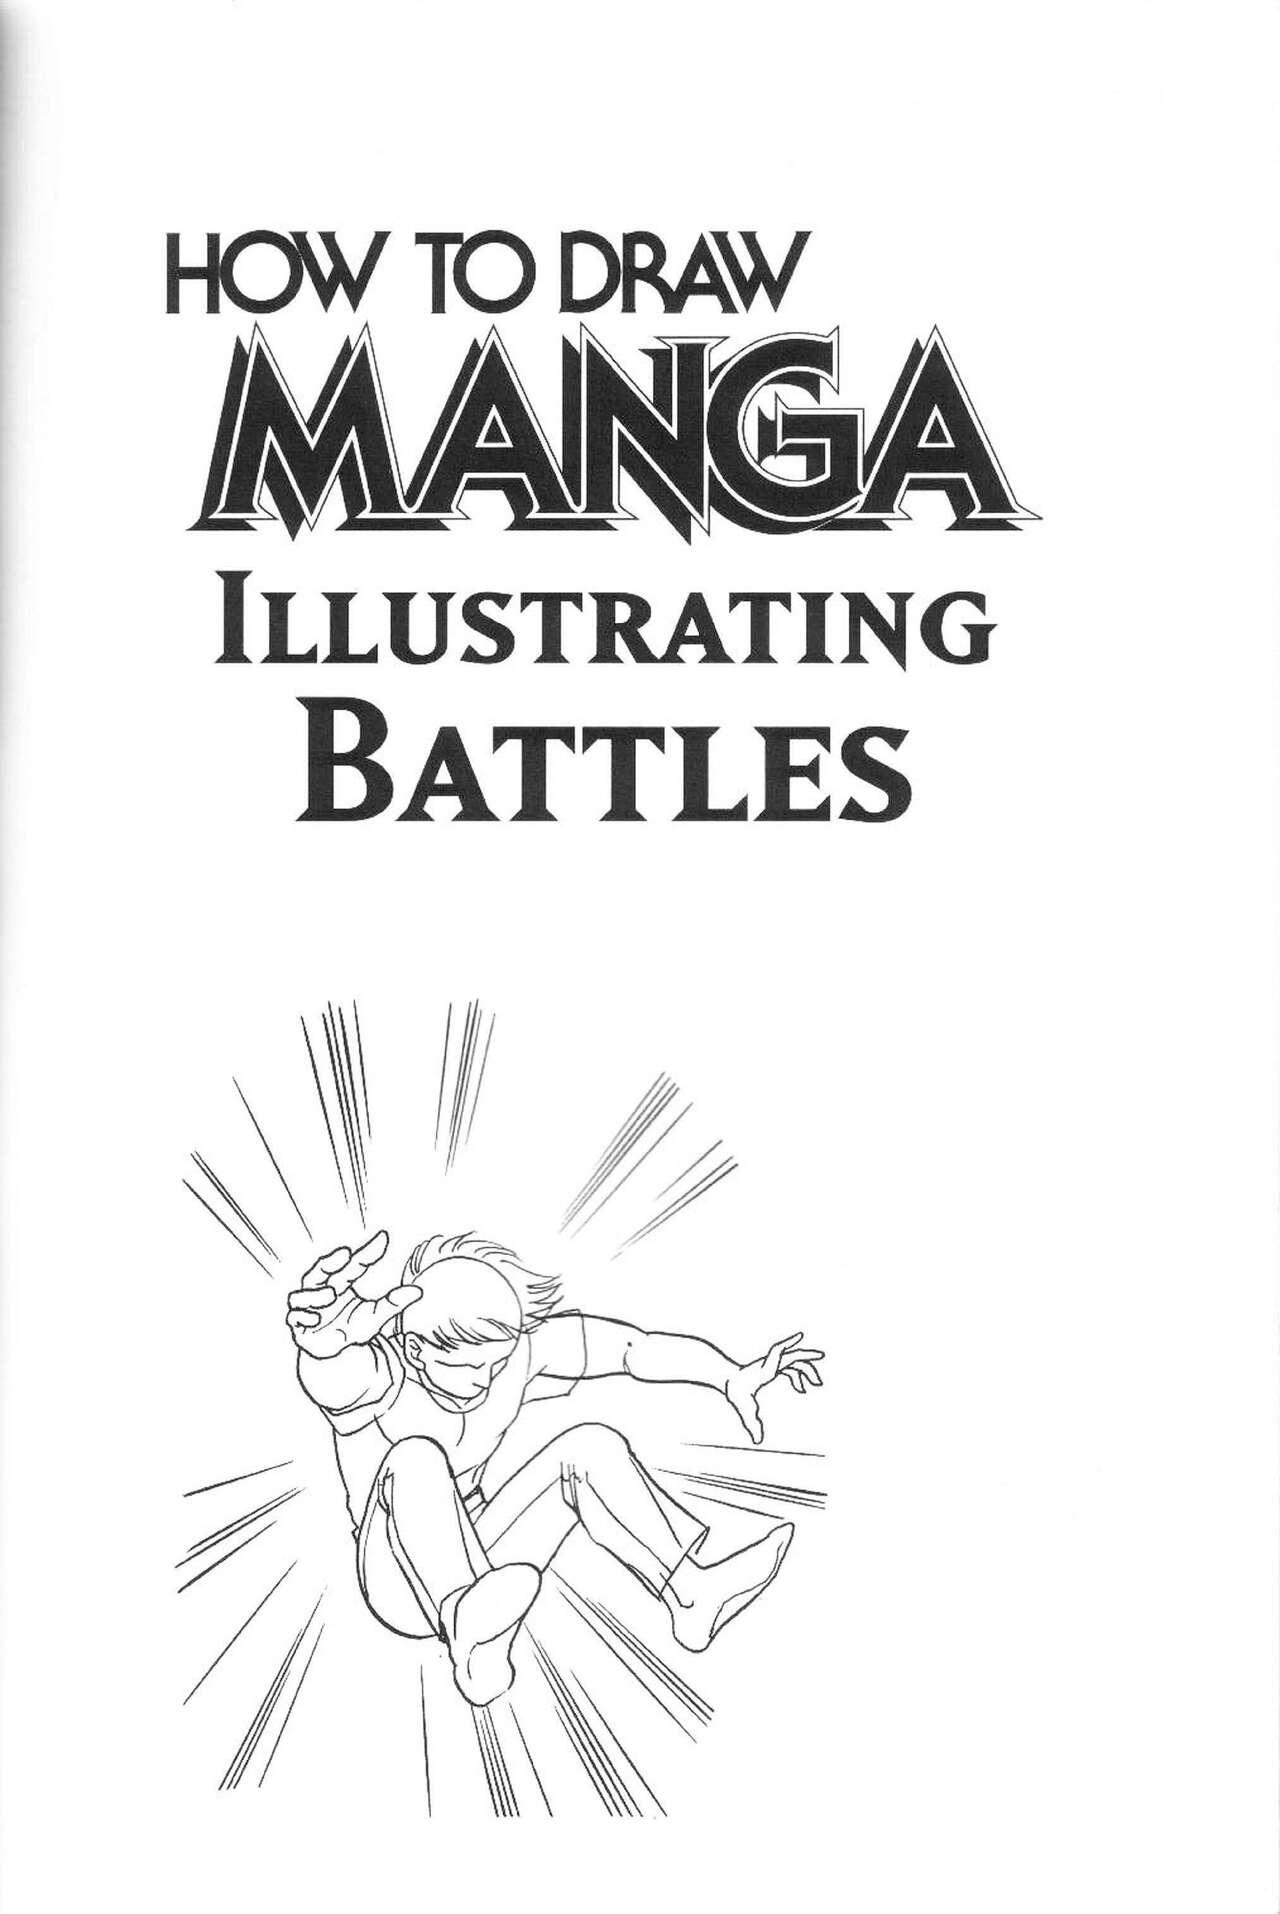 How To Draw Manga Vol. 23 Illustrating Battles 1